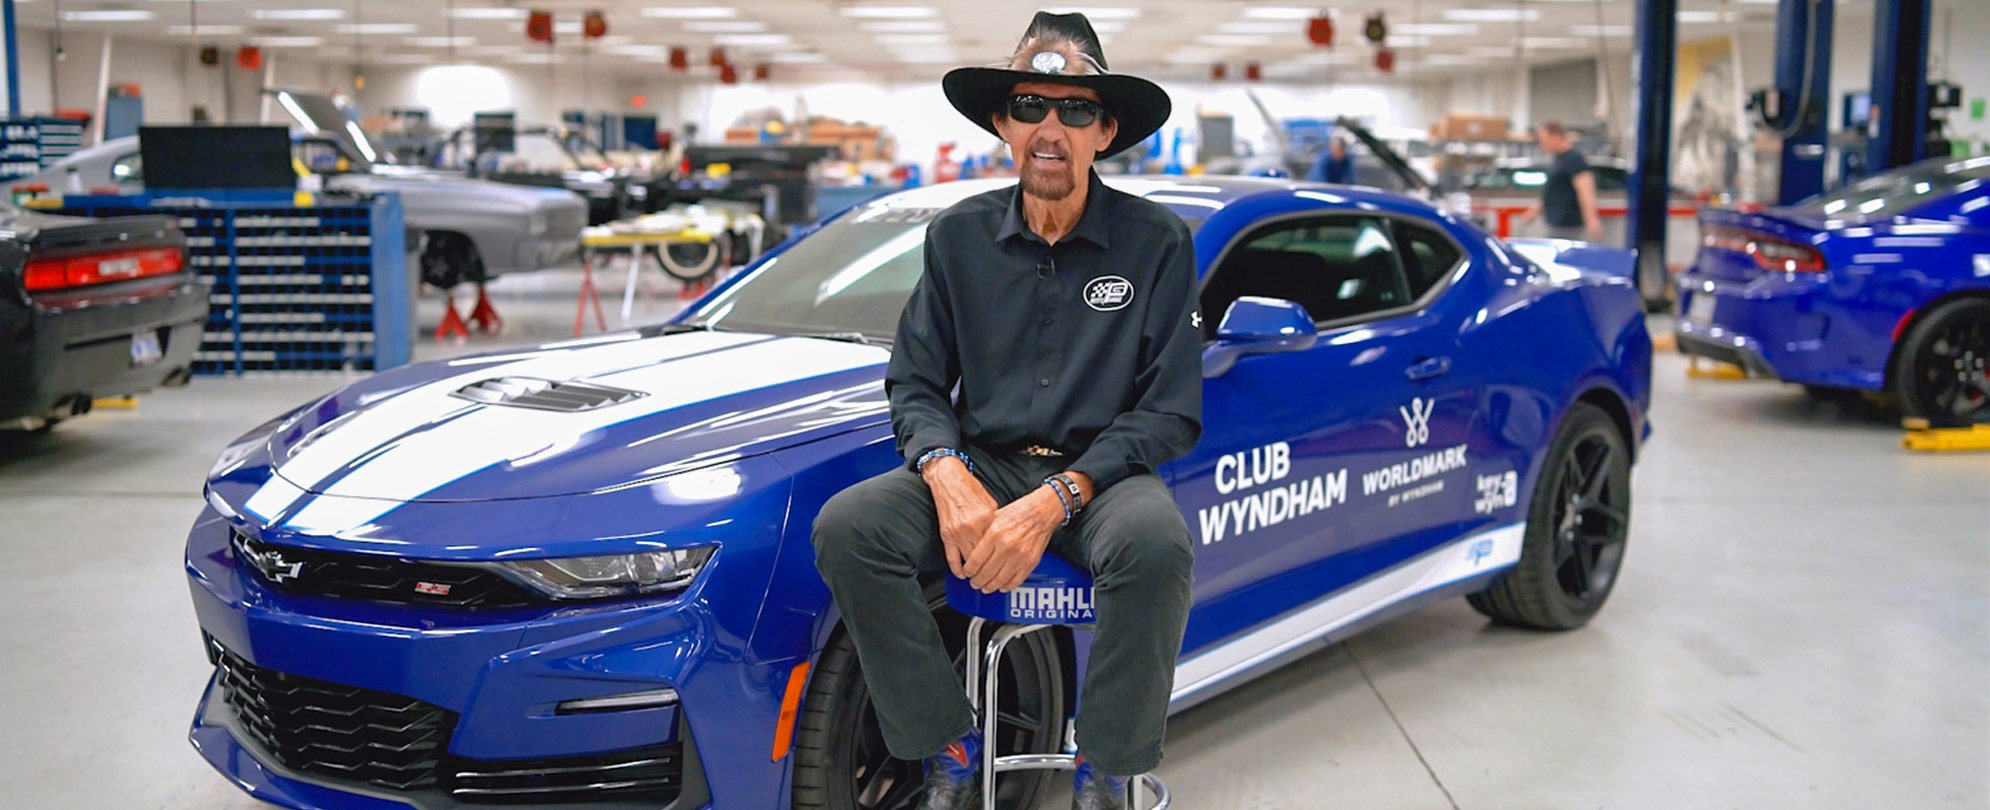 Richard Petty sits in front of a Club Wyndham and Worldmark by Wyndham branded Camaro.